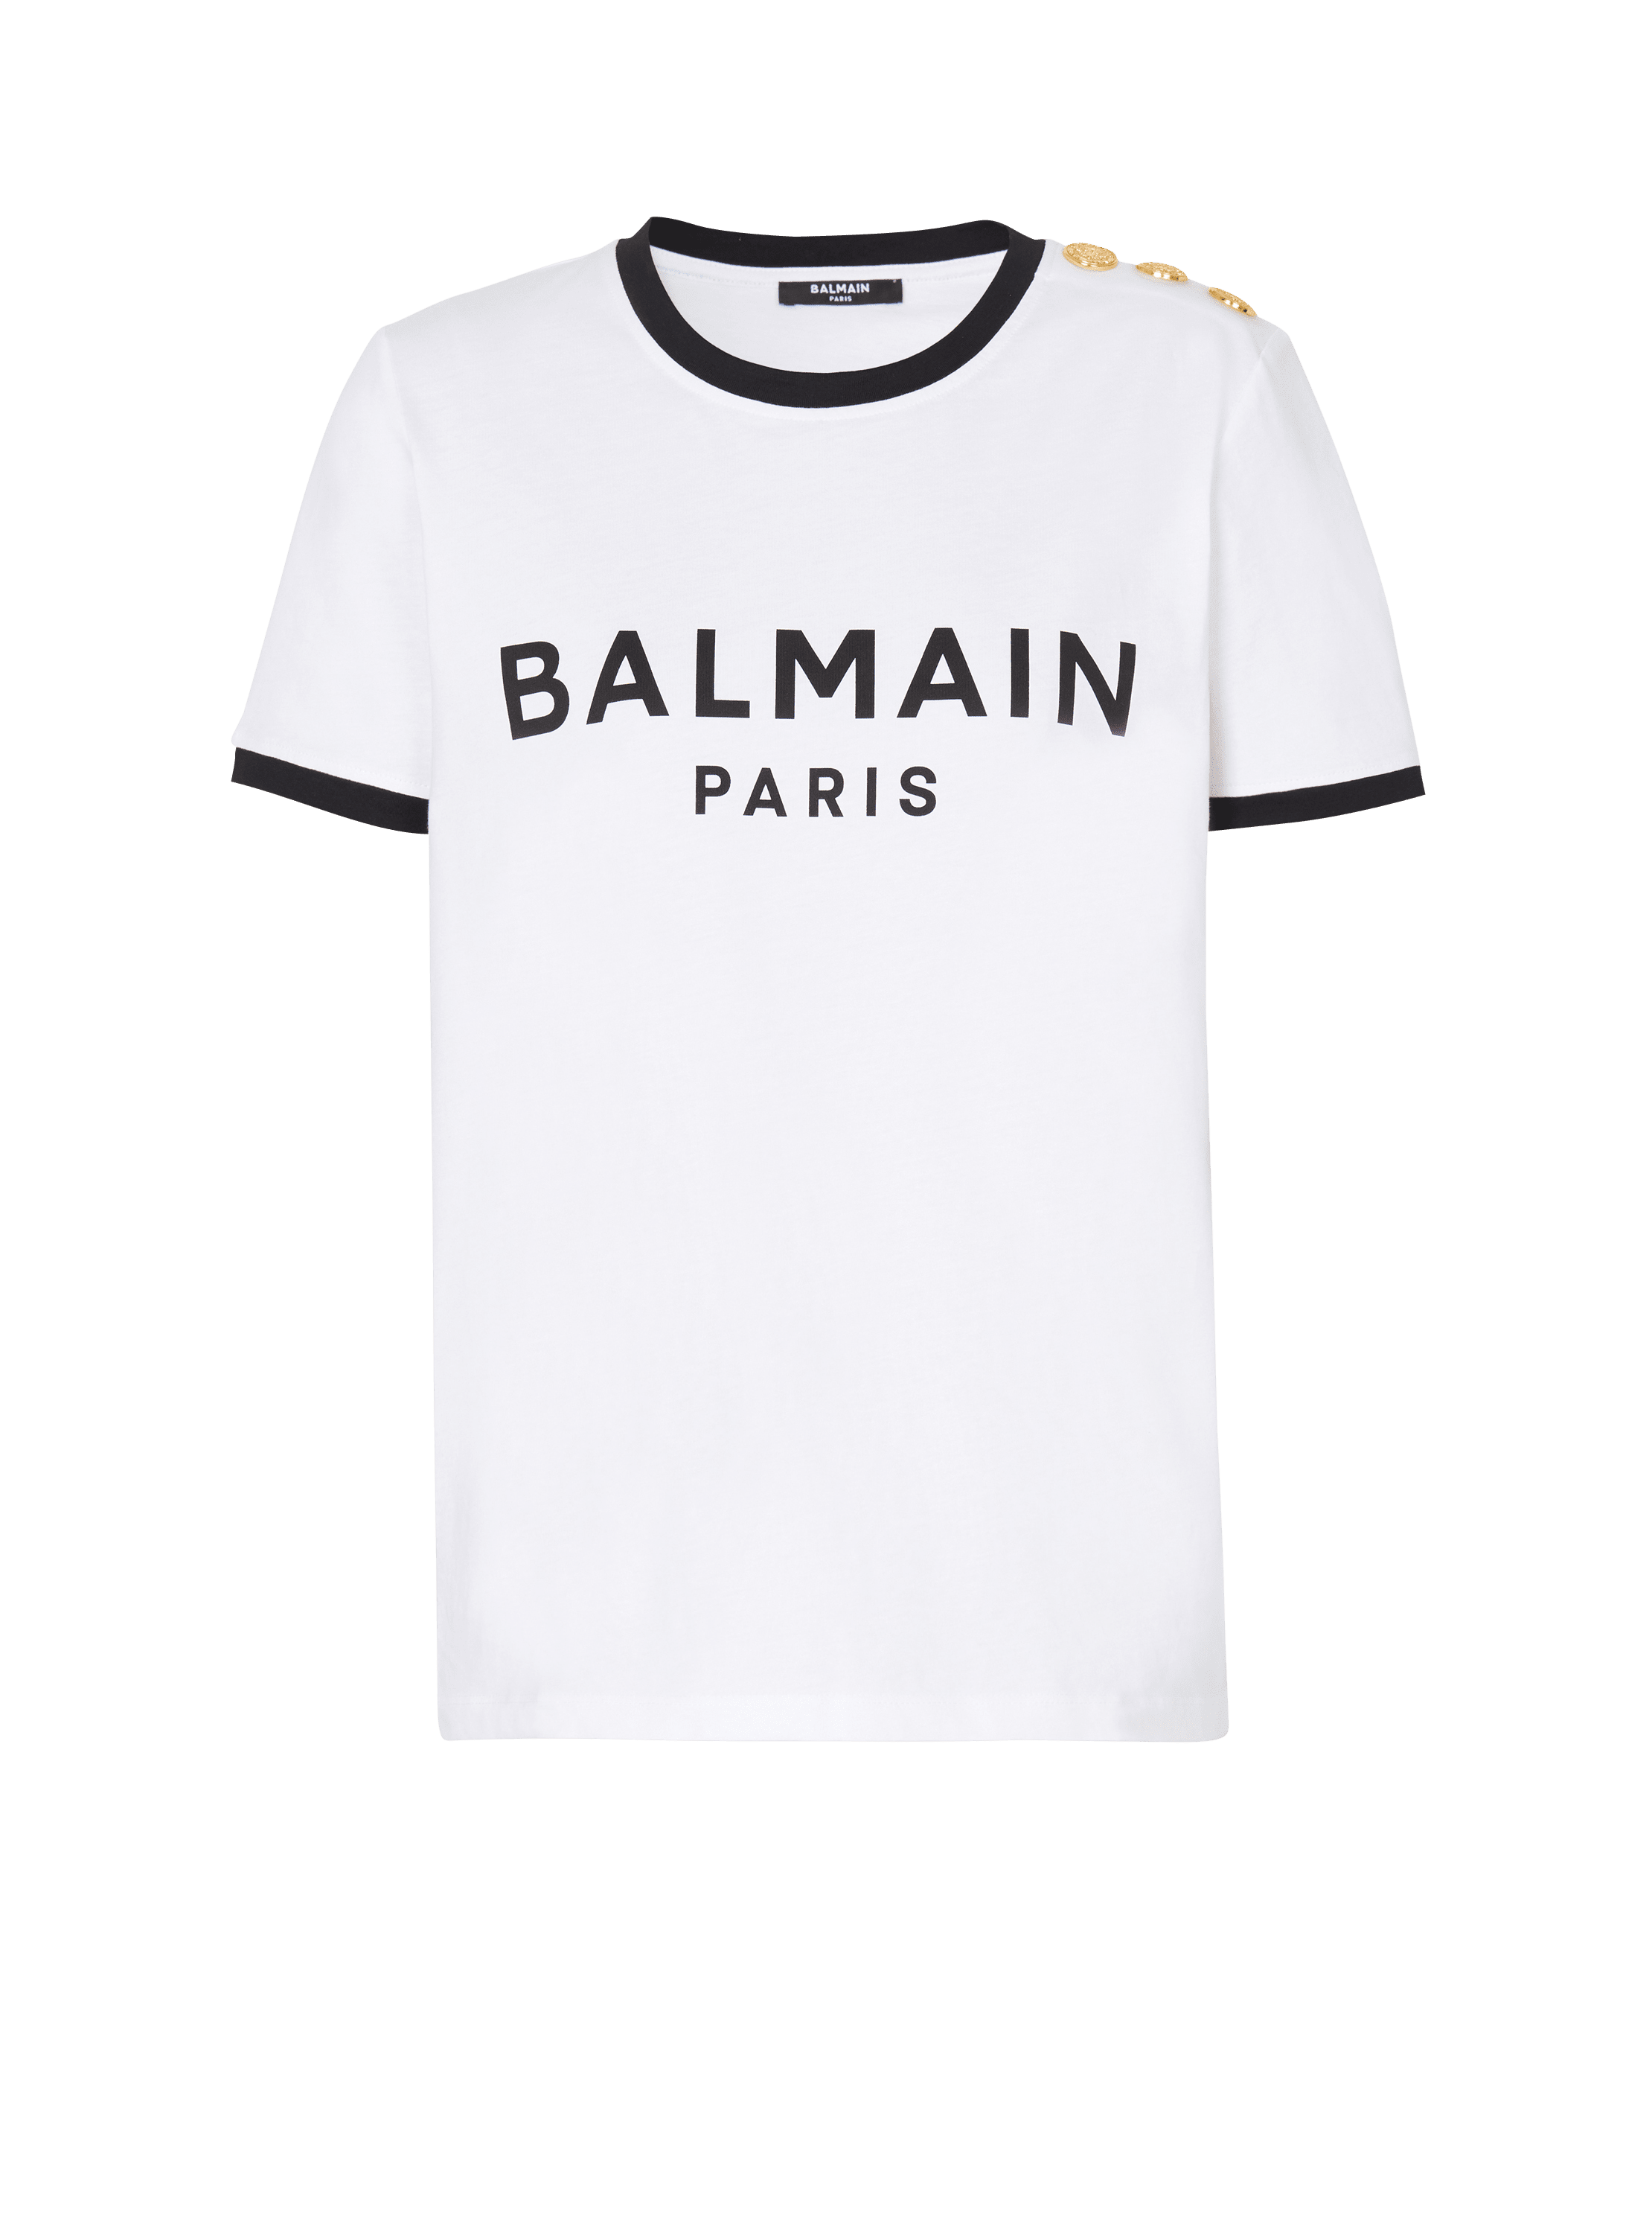 Balmain Paris 3버튼 티셔츠, 검정색, hi-res